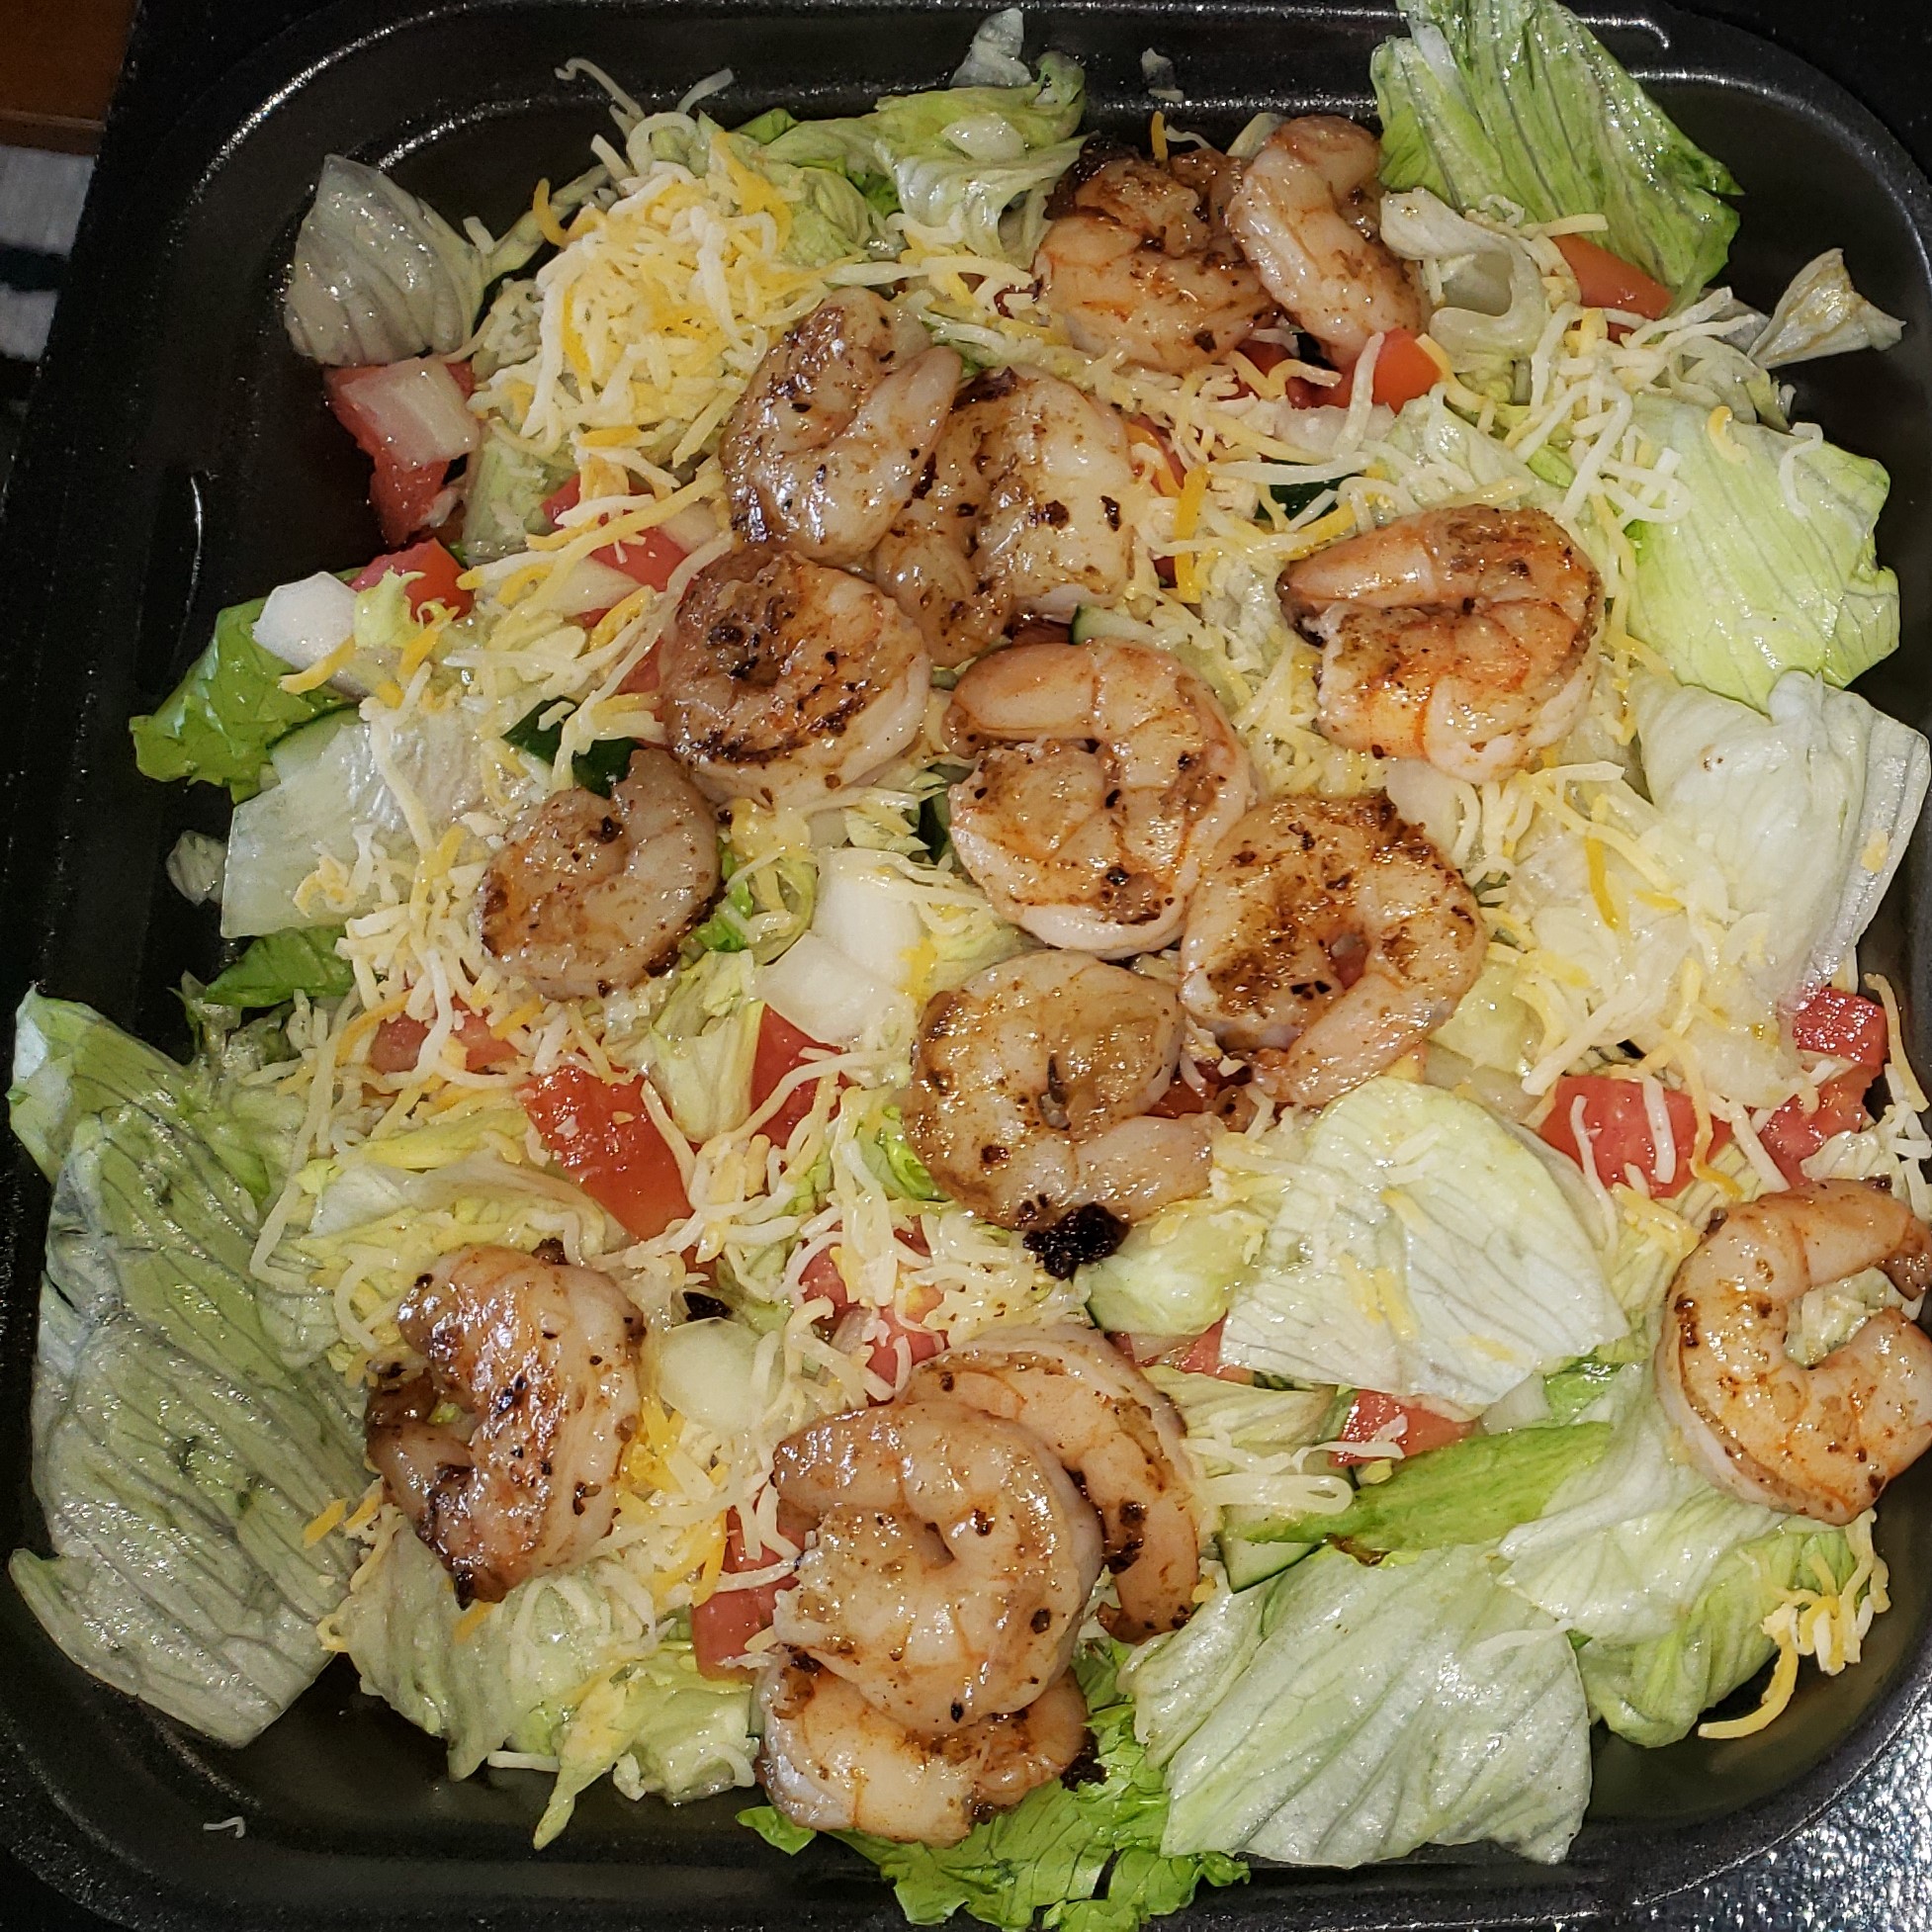 Green Salad with Grilled Shrimp - $10.95